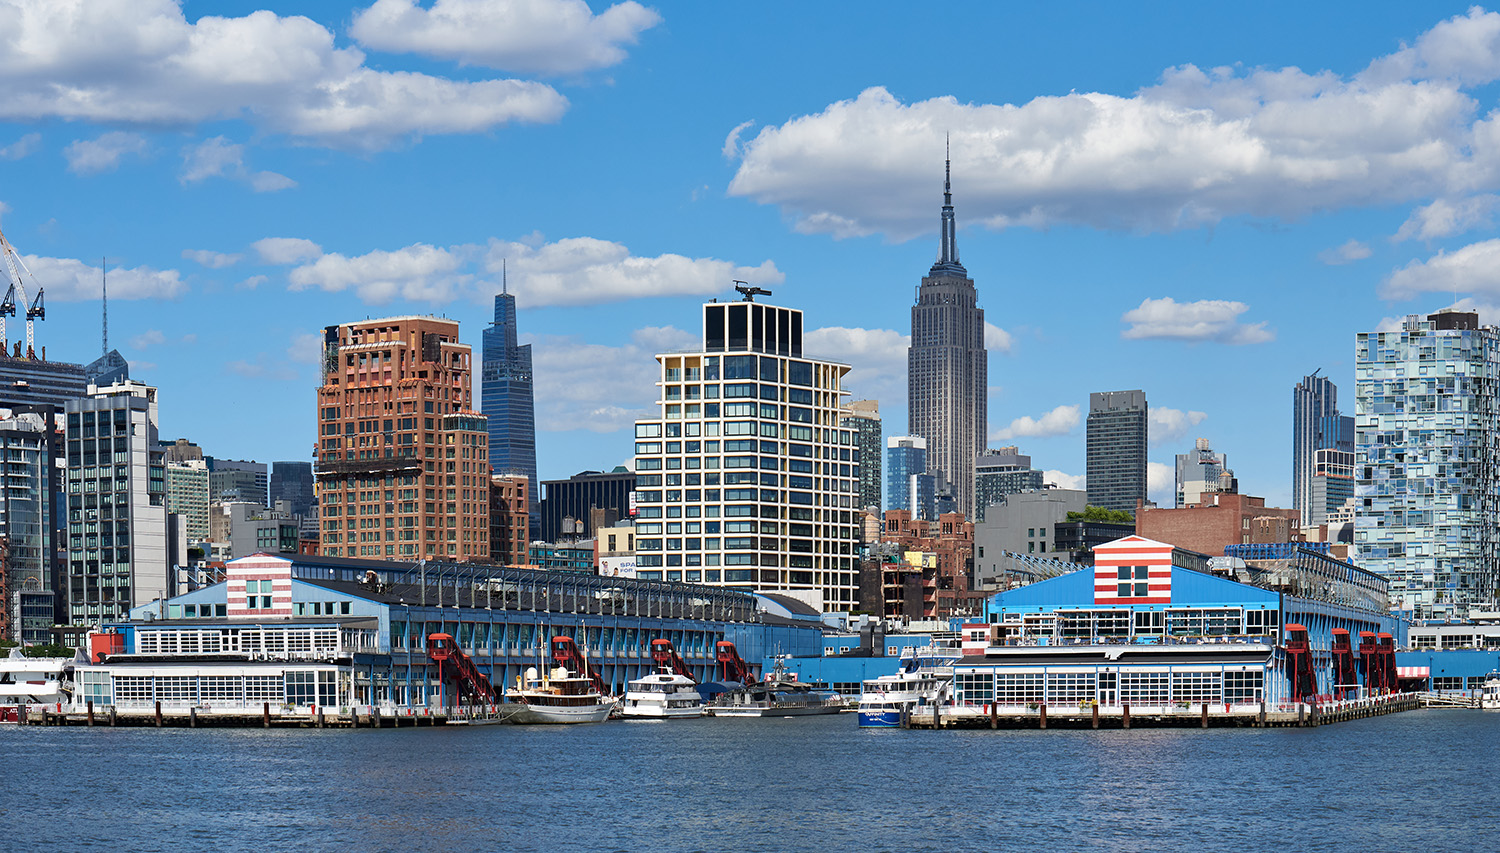 Chelsea Piers, New York, NY – Photo by John Penney/Shutterstock